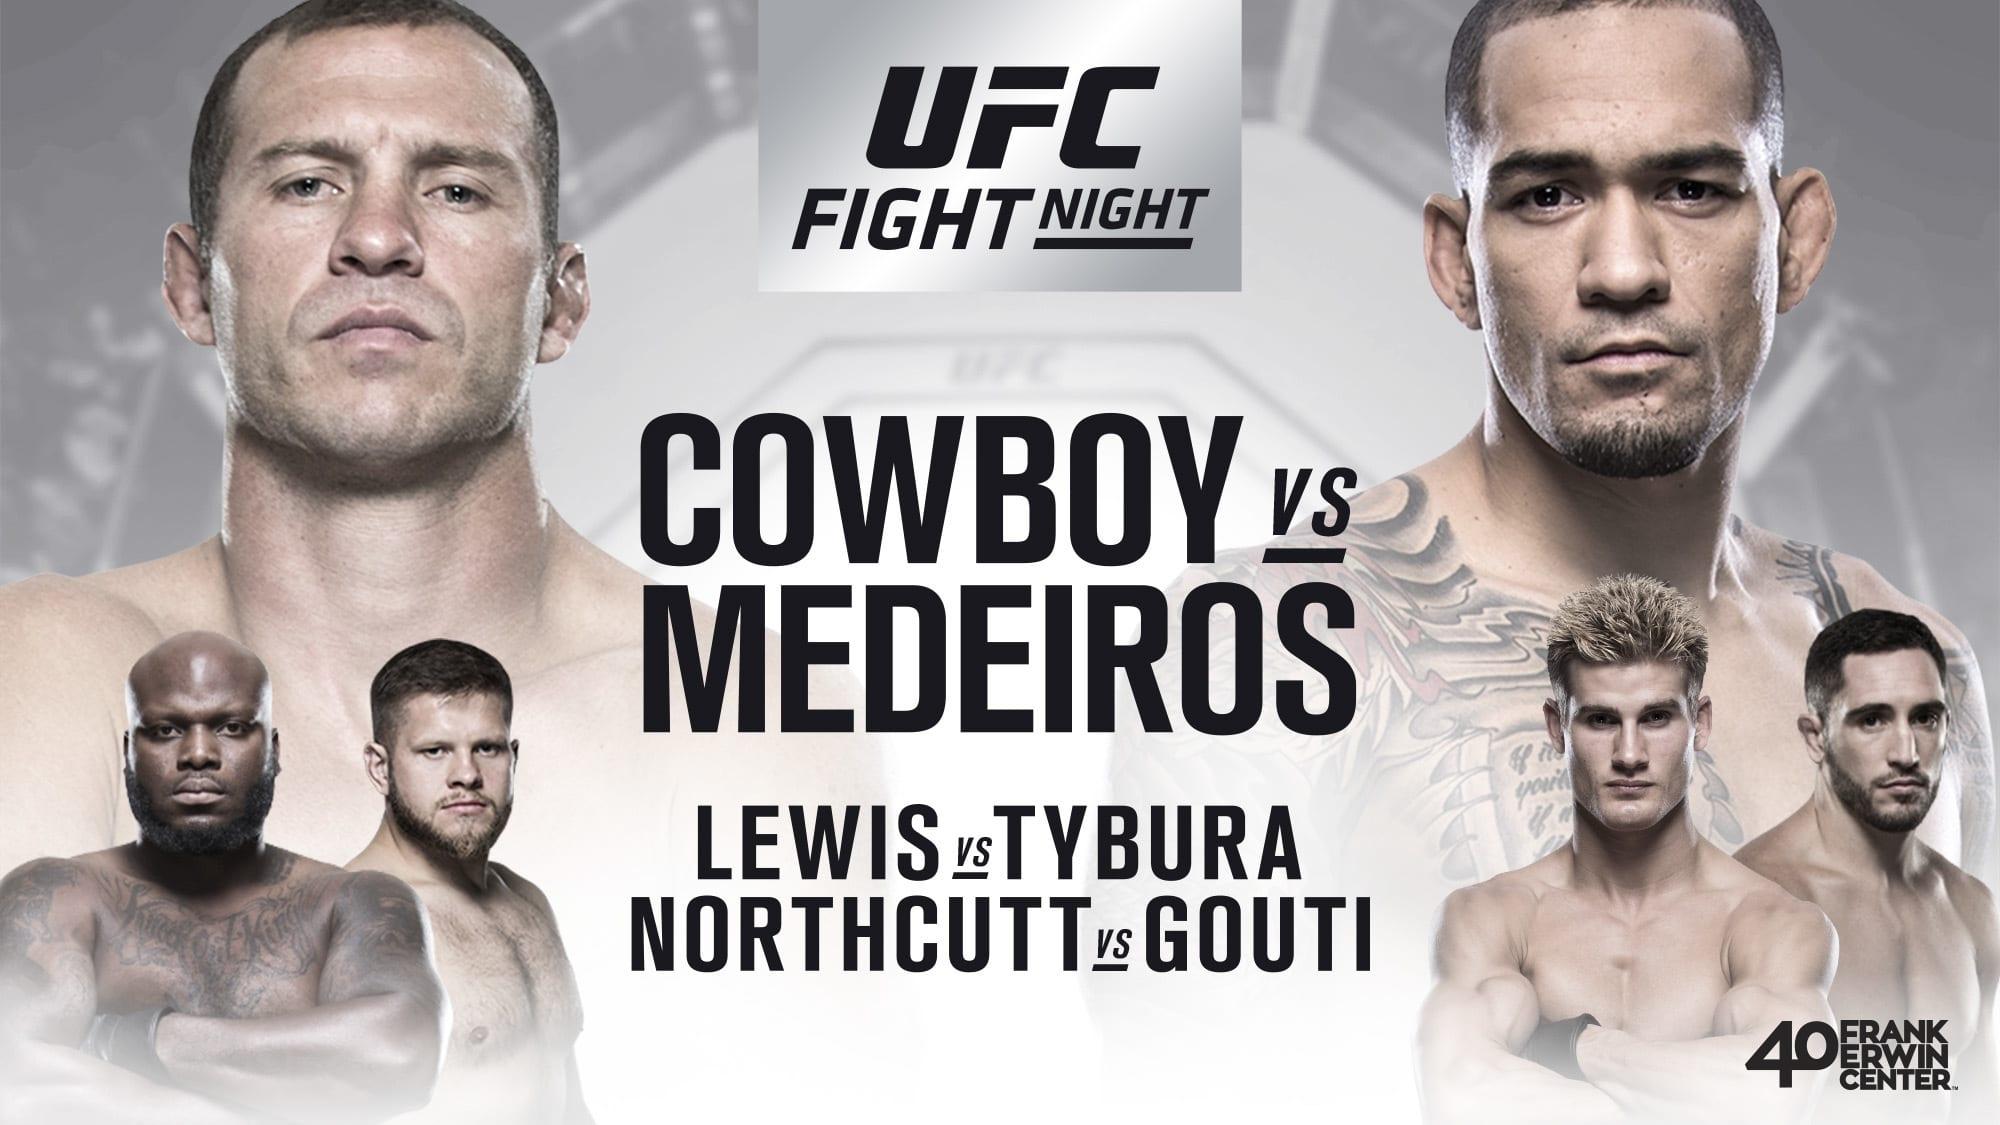 UFC Fight Night 126: Cowboy vs. Medeiros backdrop